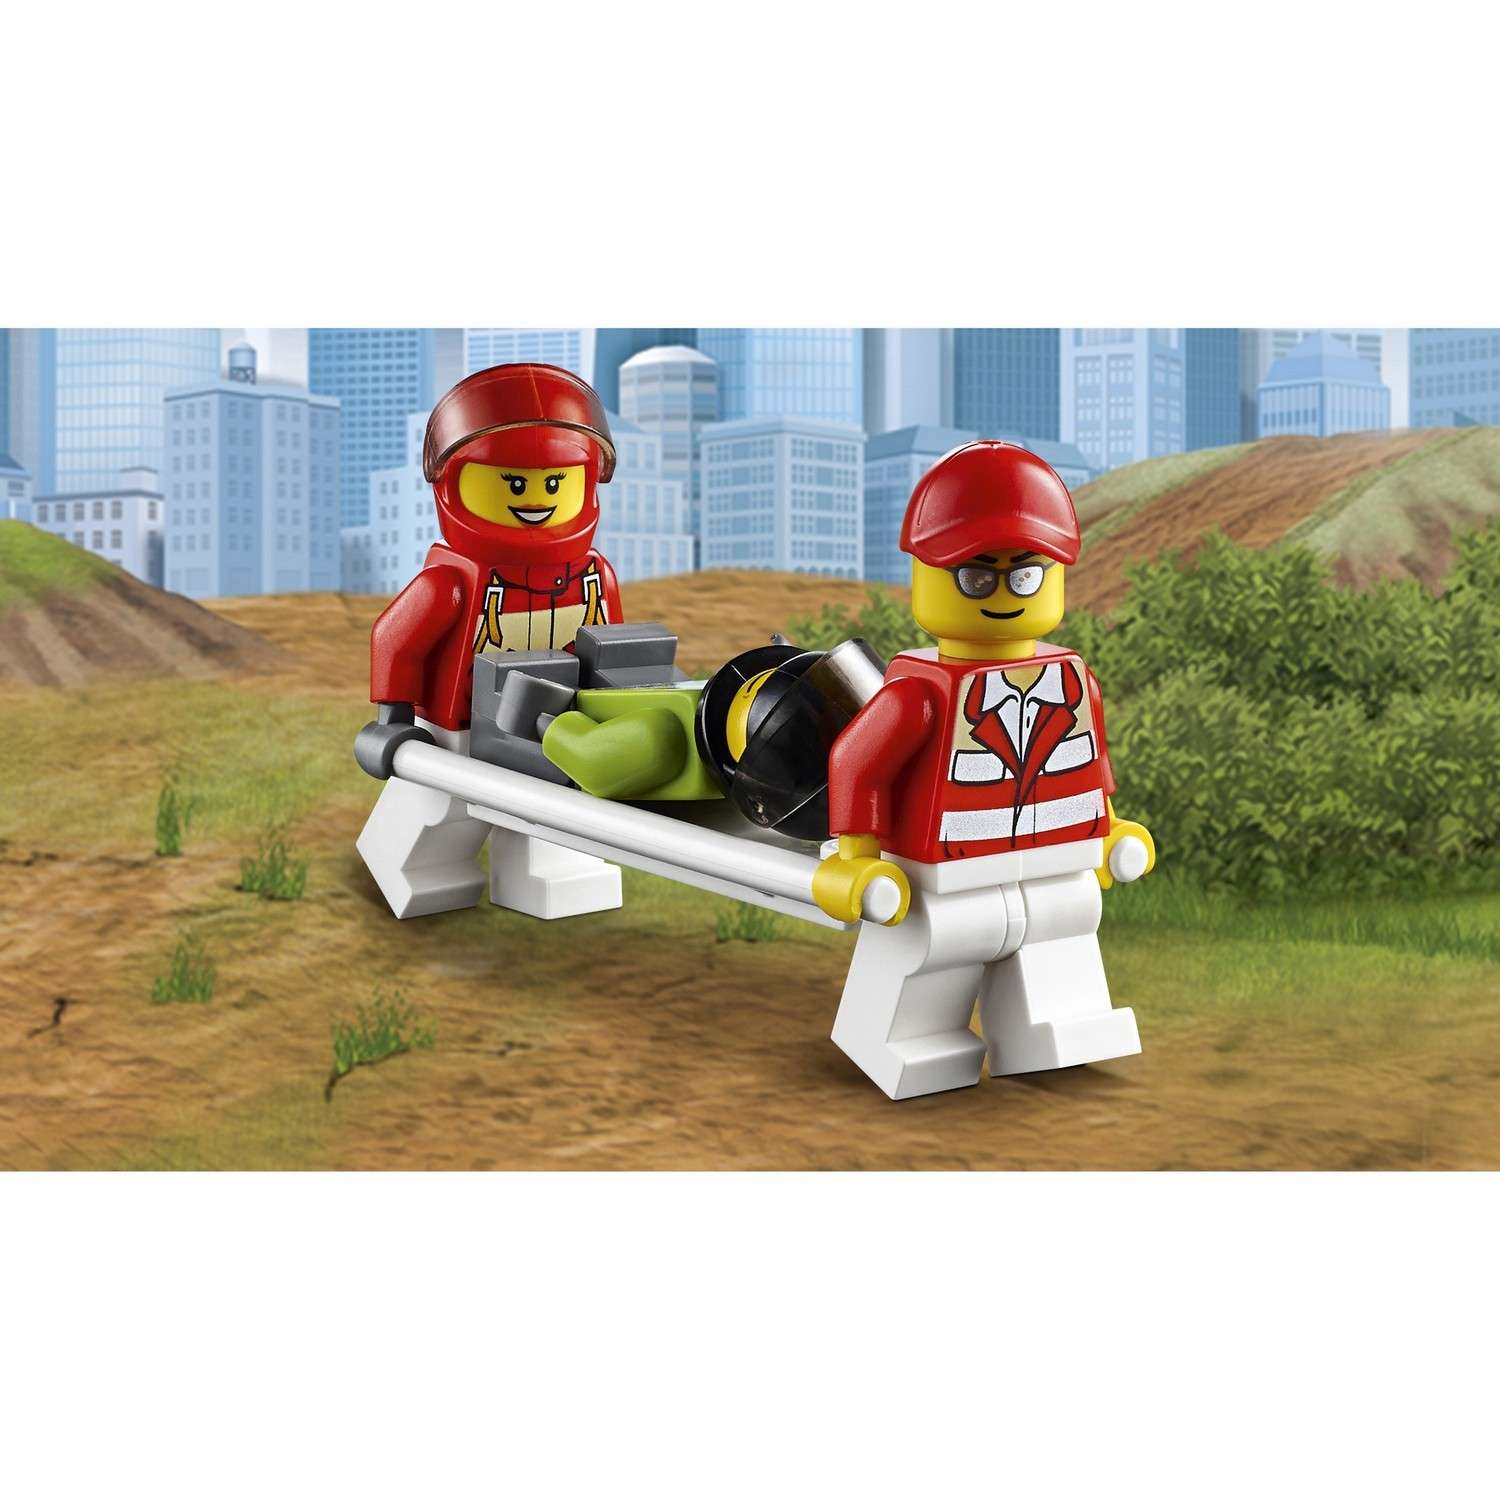 Конструктор LEGO City Great Vehicles Самолет скорой помощи (60116) - фото 8